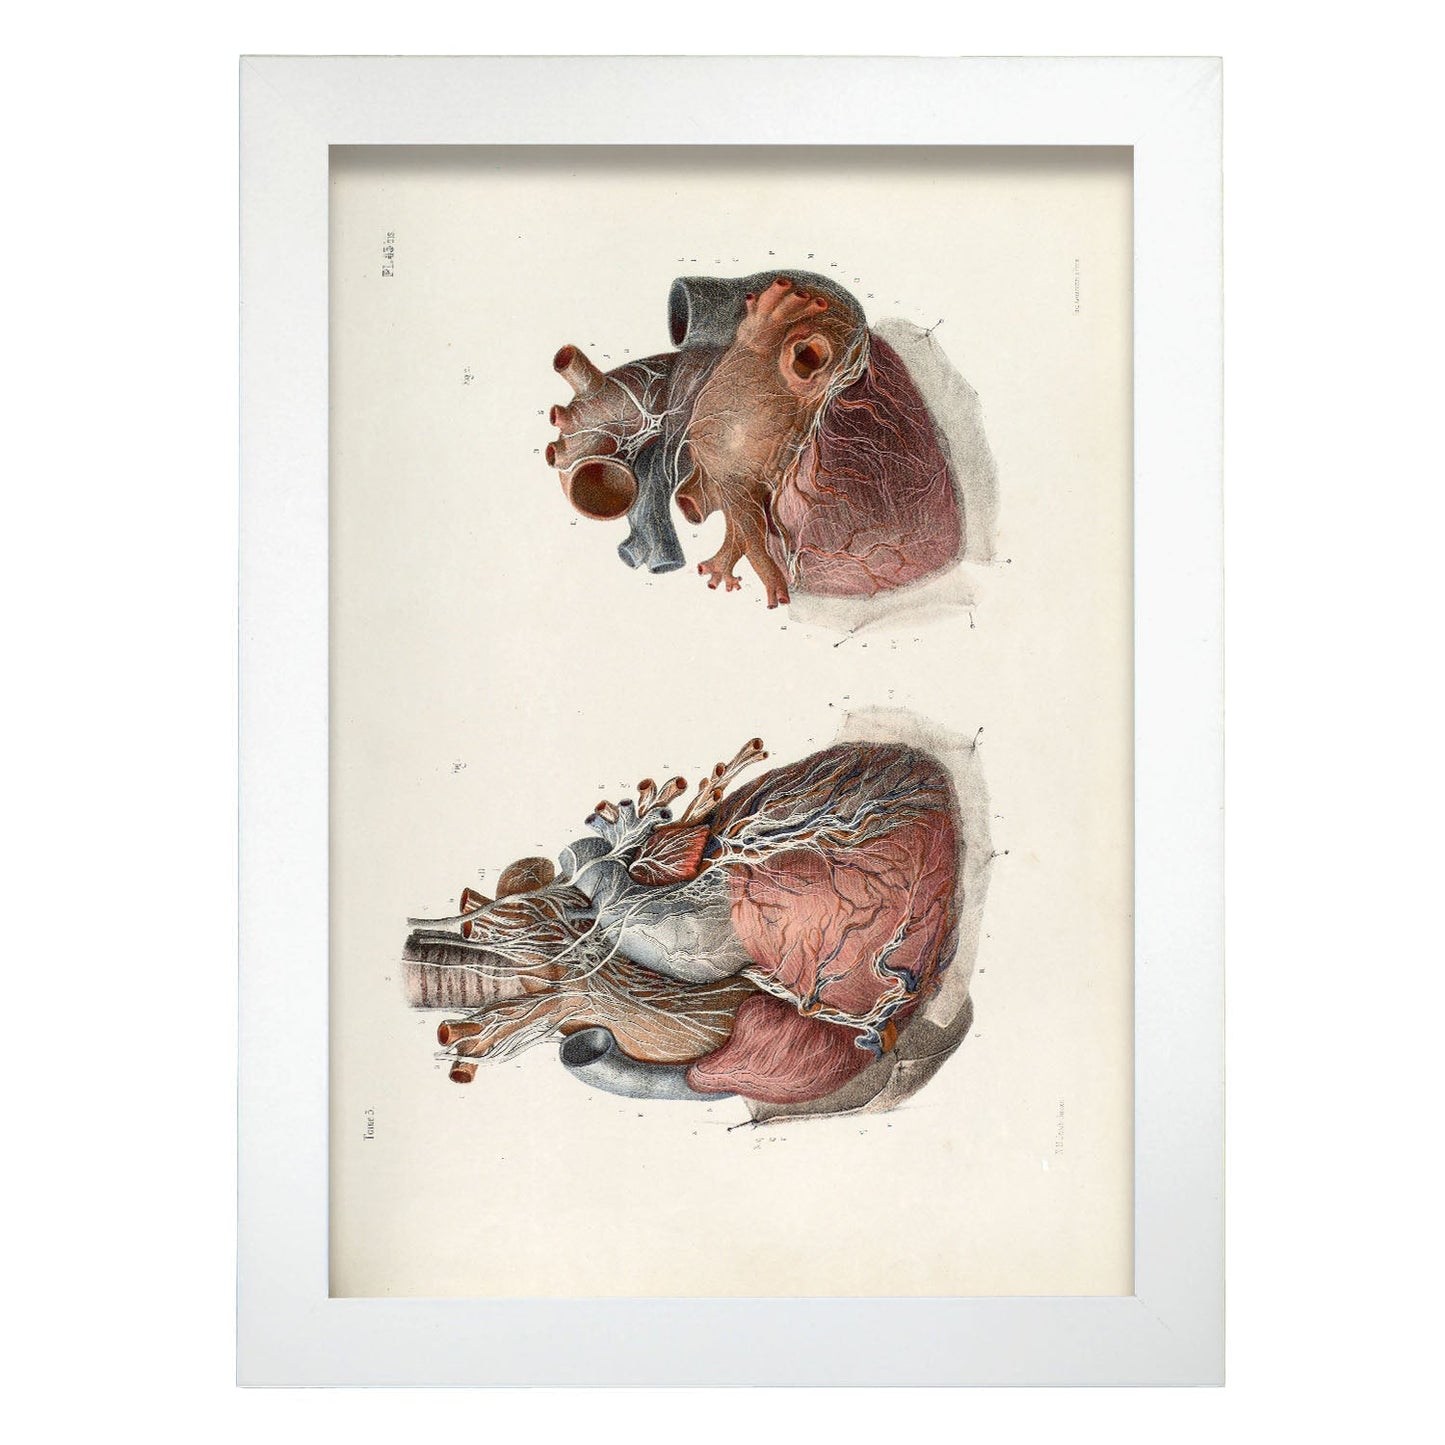 Heart and vagus nerve-Artwork-Nacnic-A4-Marco Blanco-Nacnic Estudio SL